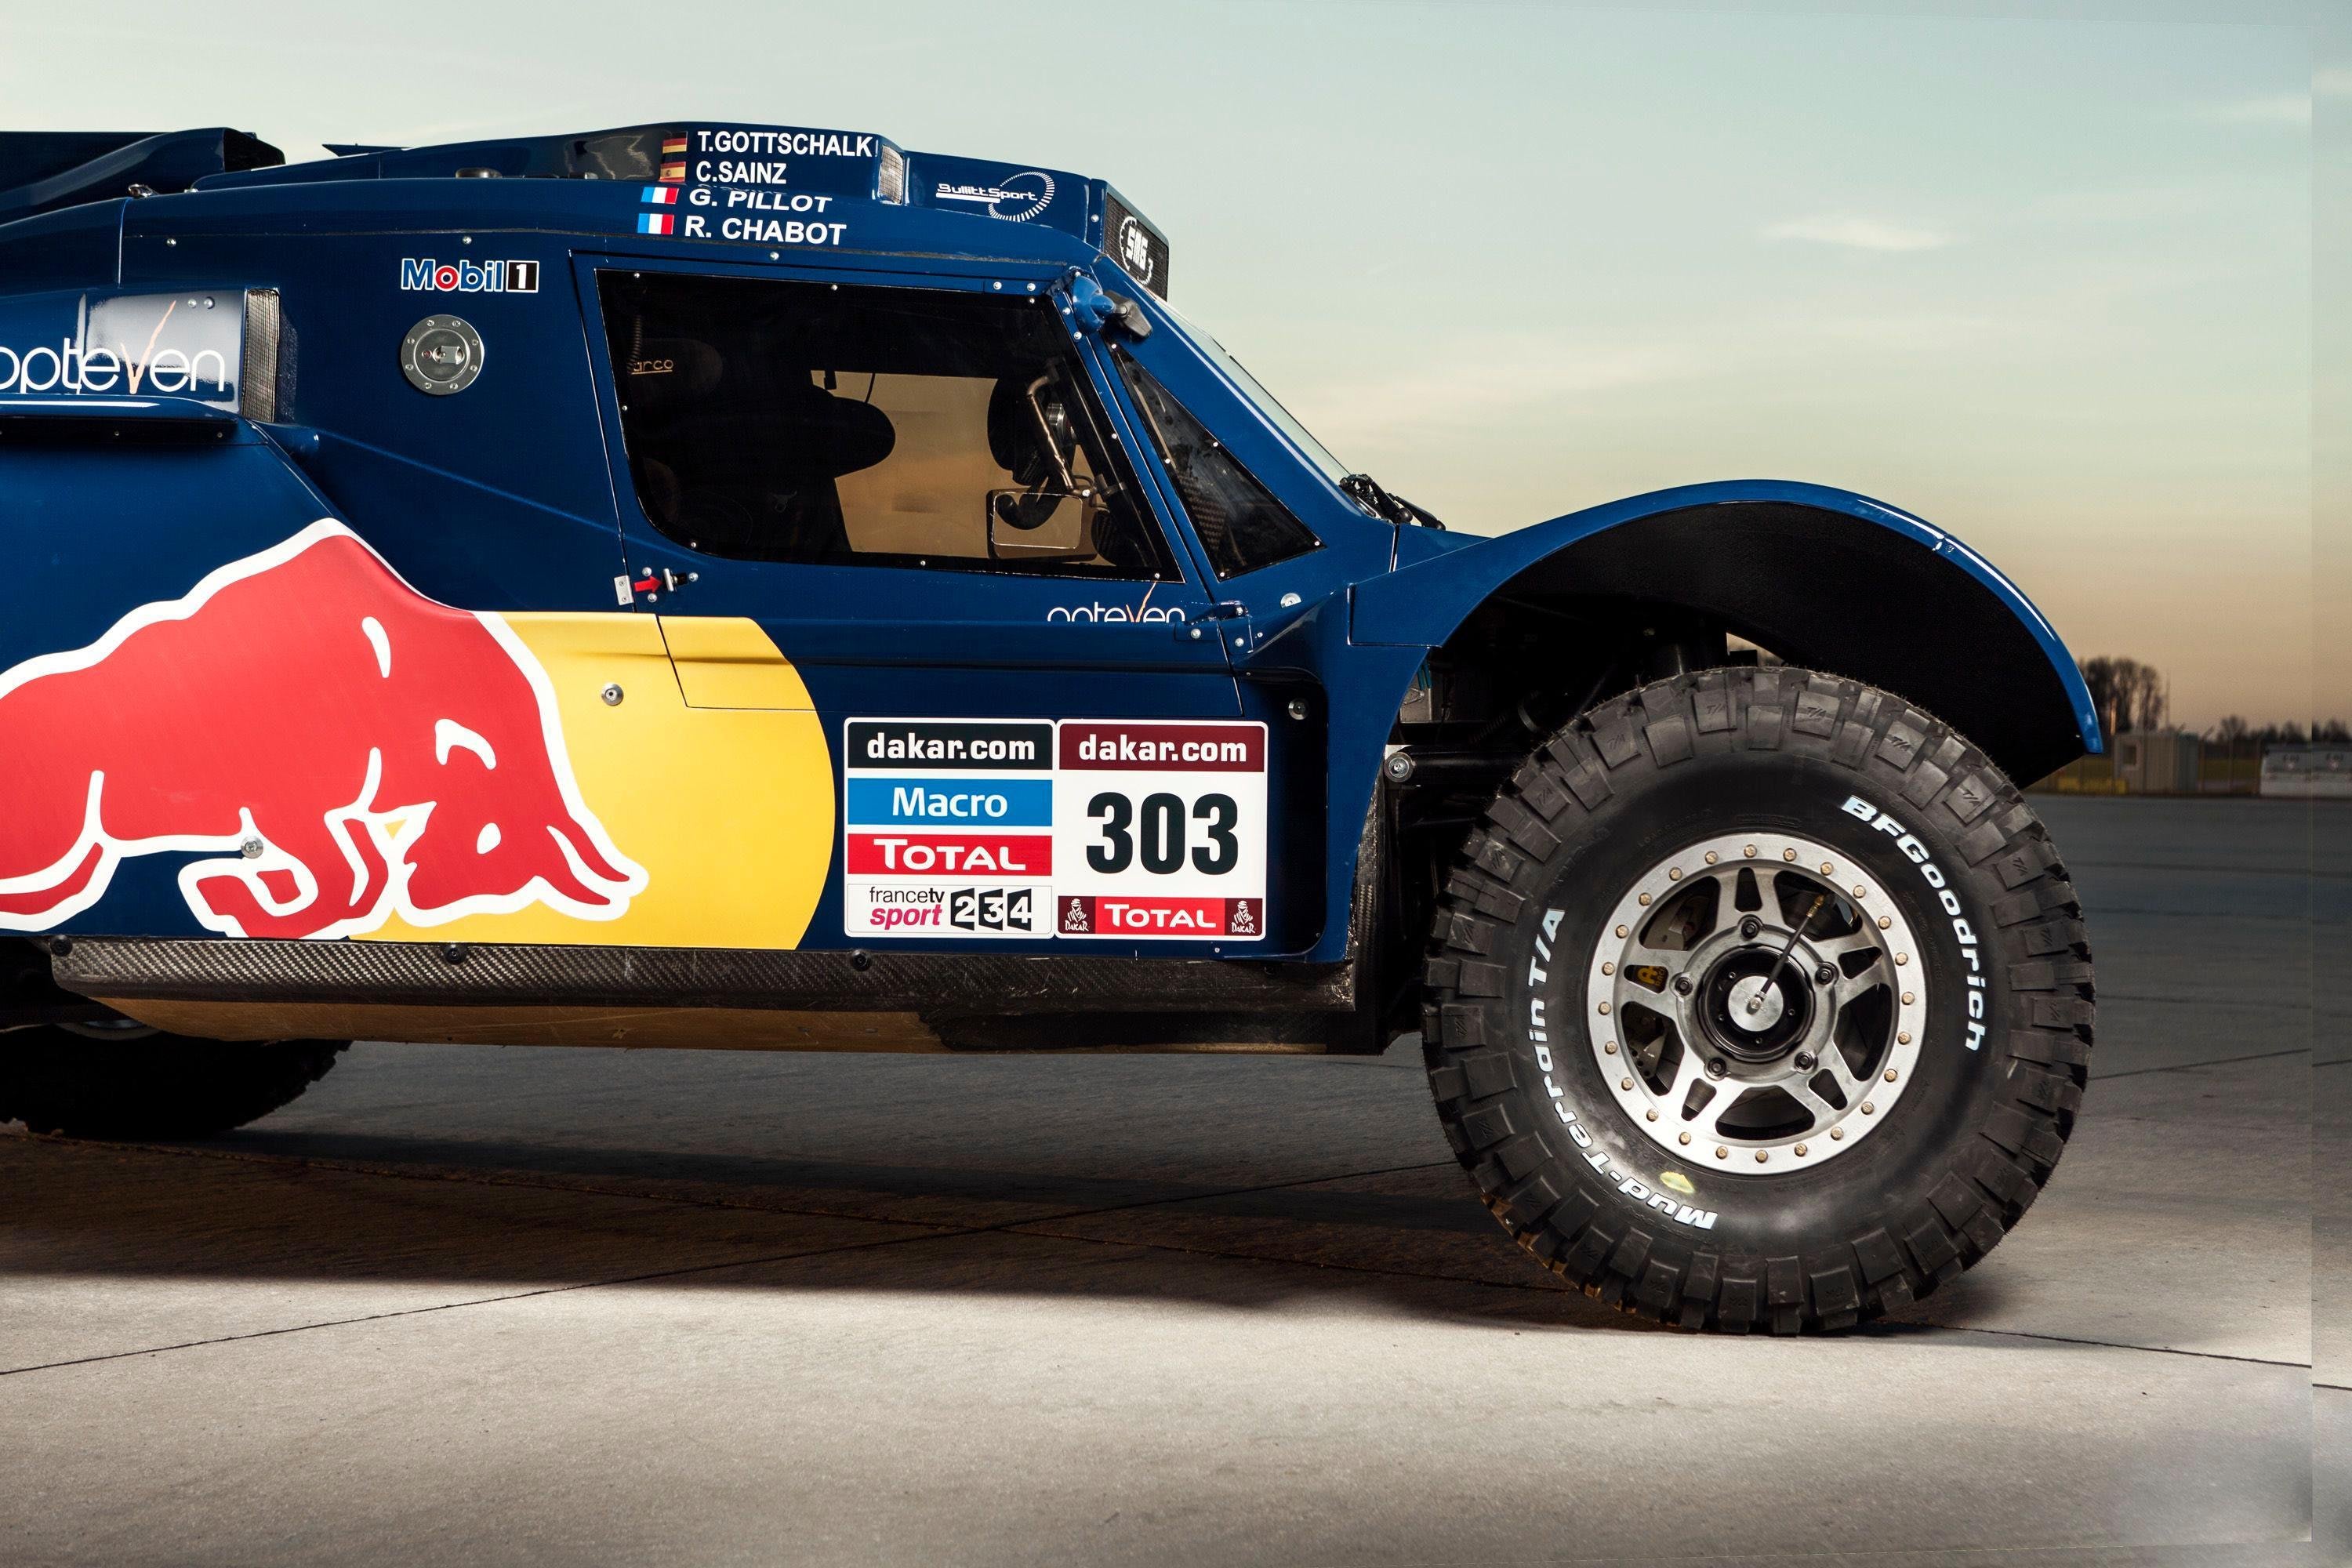 Red Buggy: A Dakar Machine